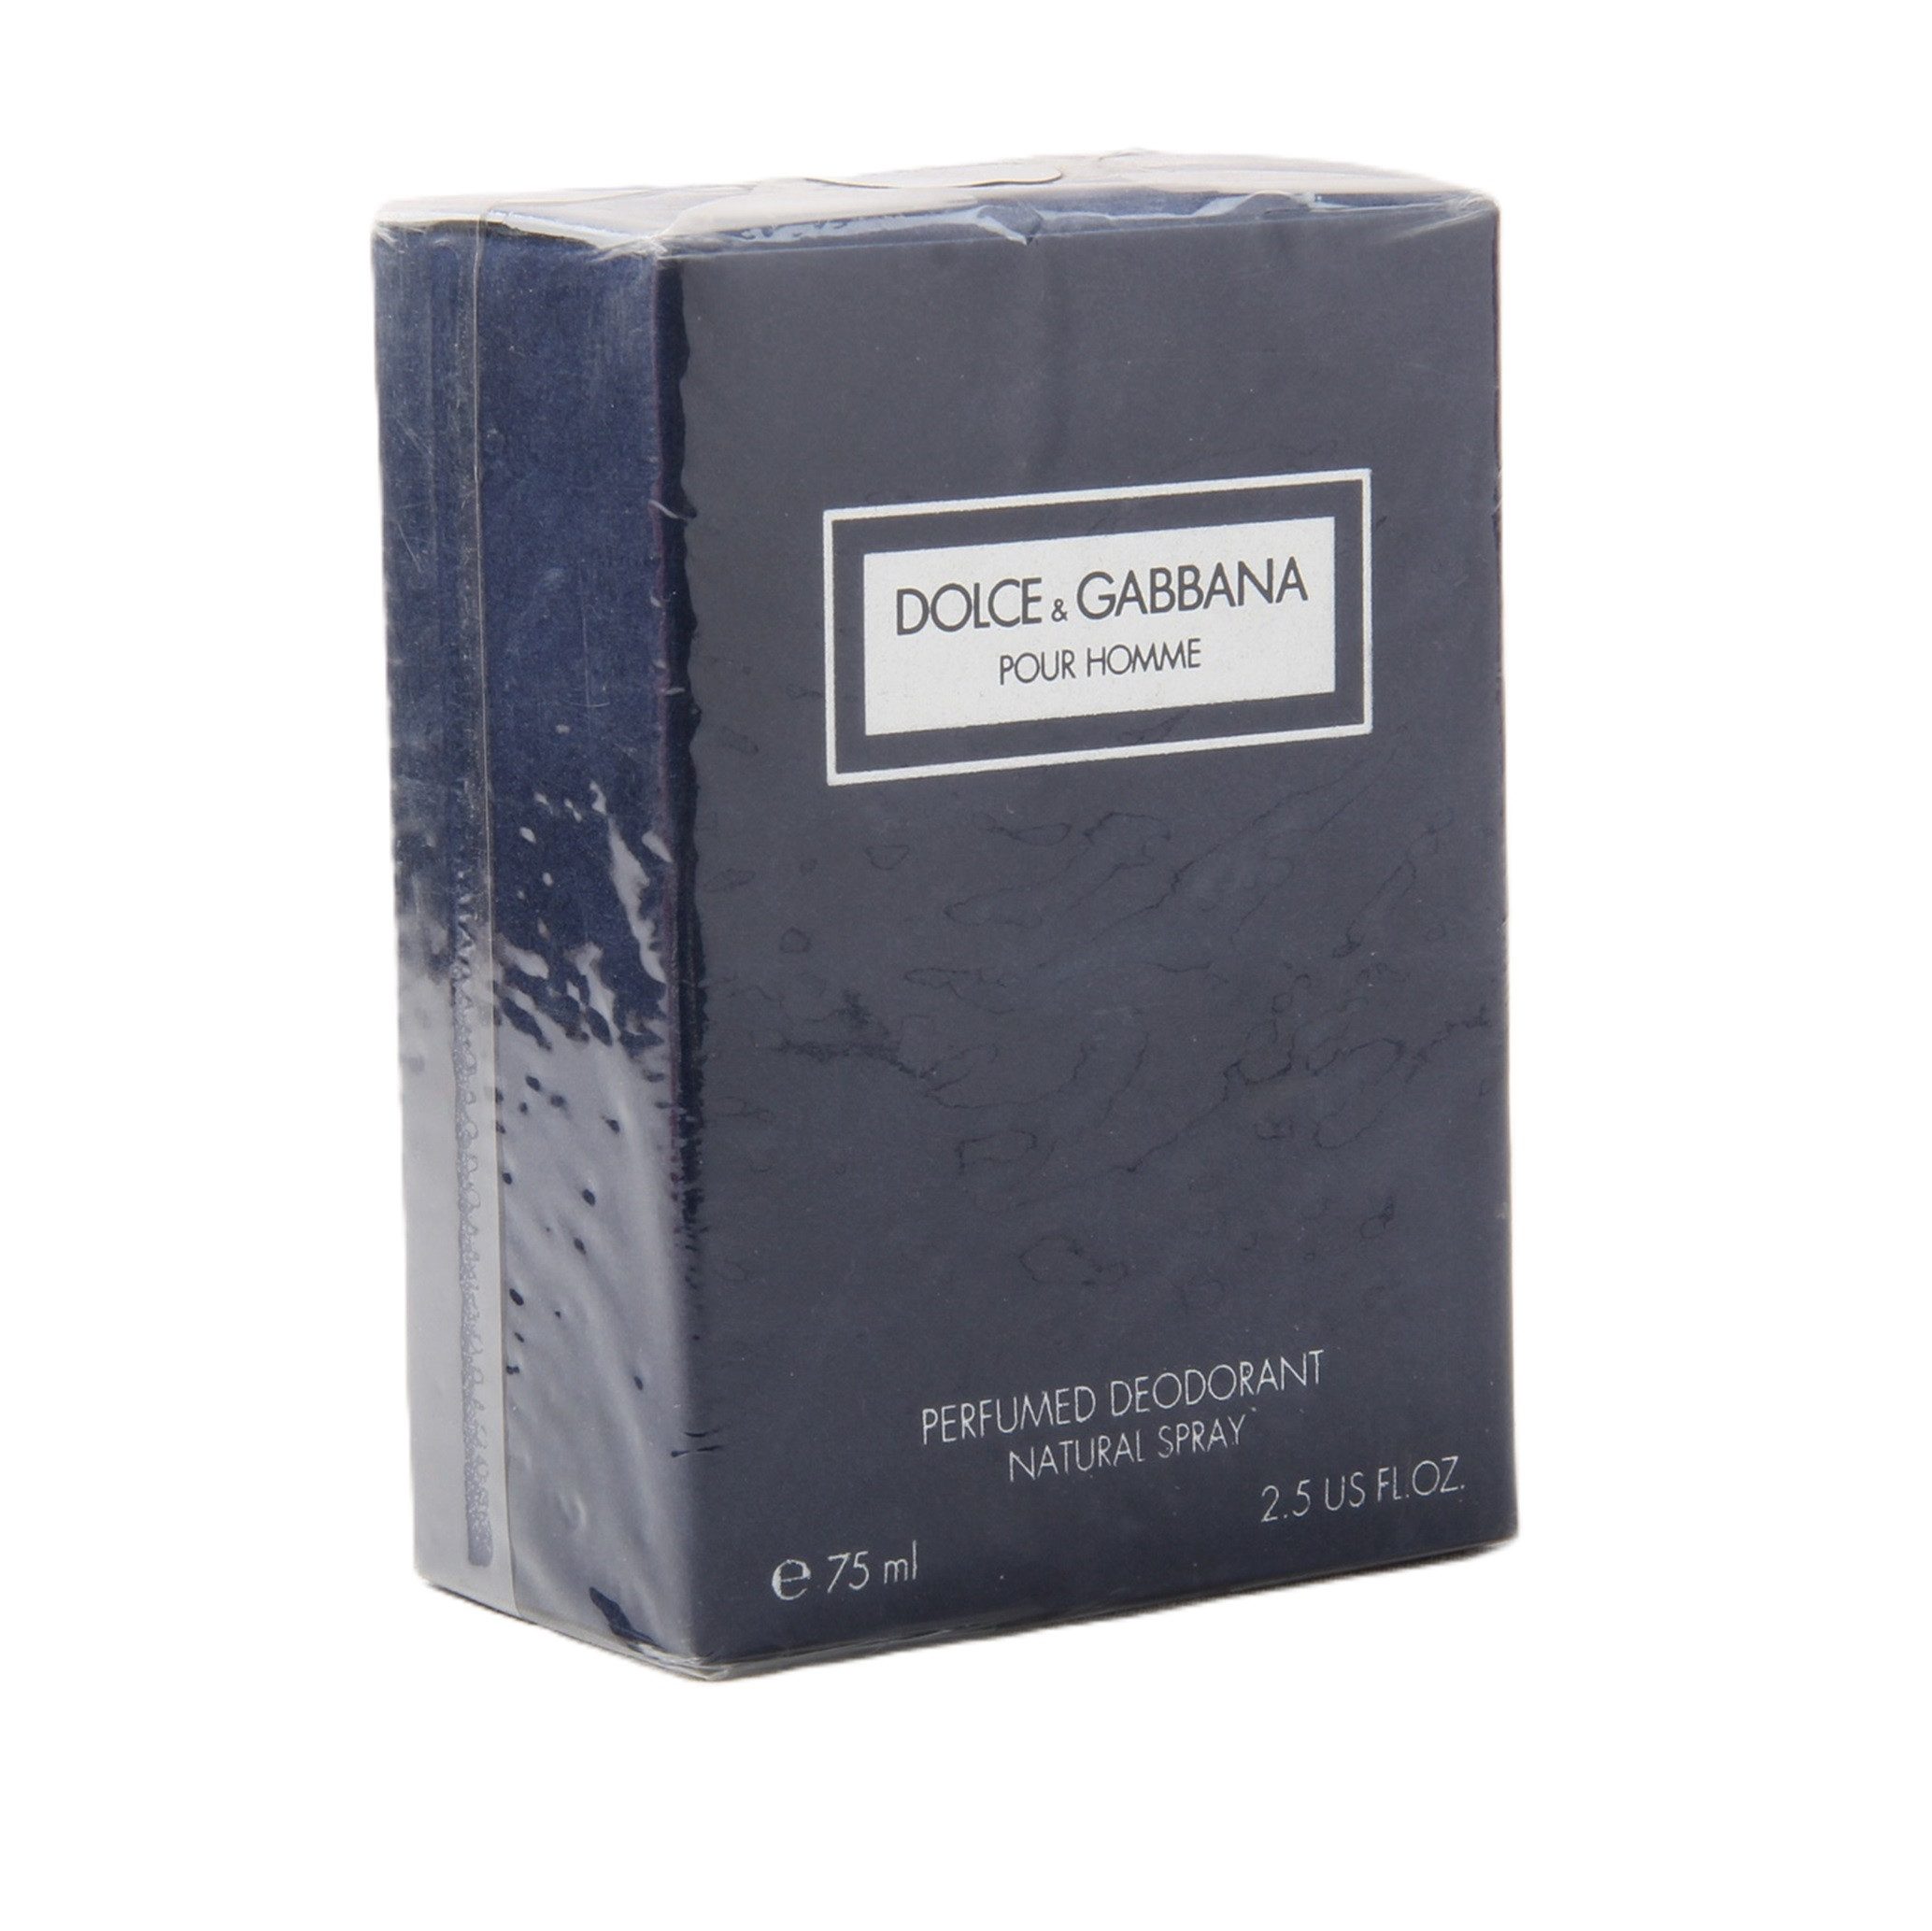 DOLCE & GABBANA Eau de Toilette Dolce & Gabbana Pour Homme Perfumed Deodorant Spray 75ml